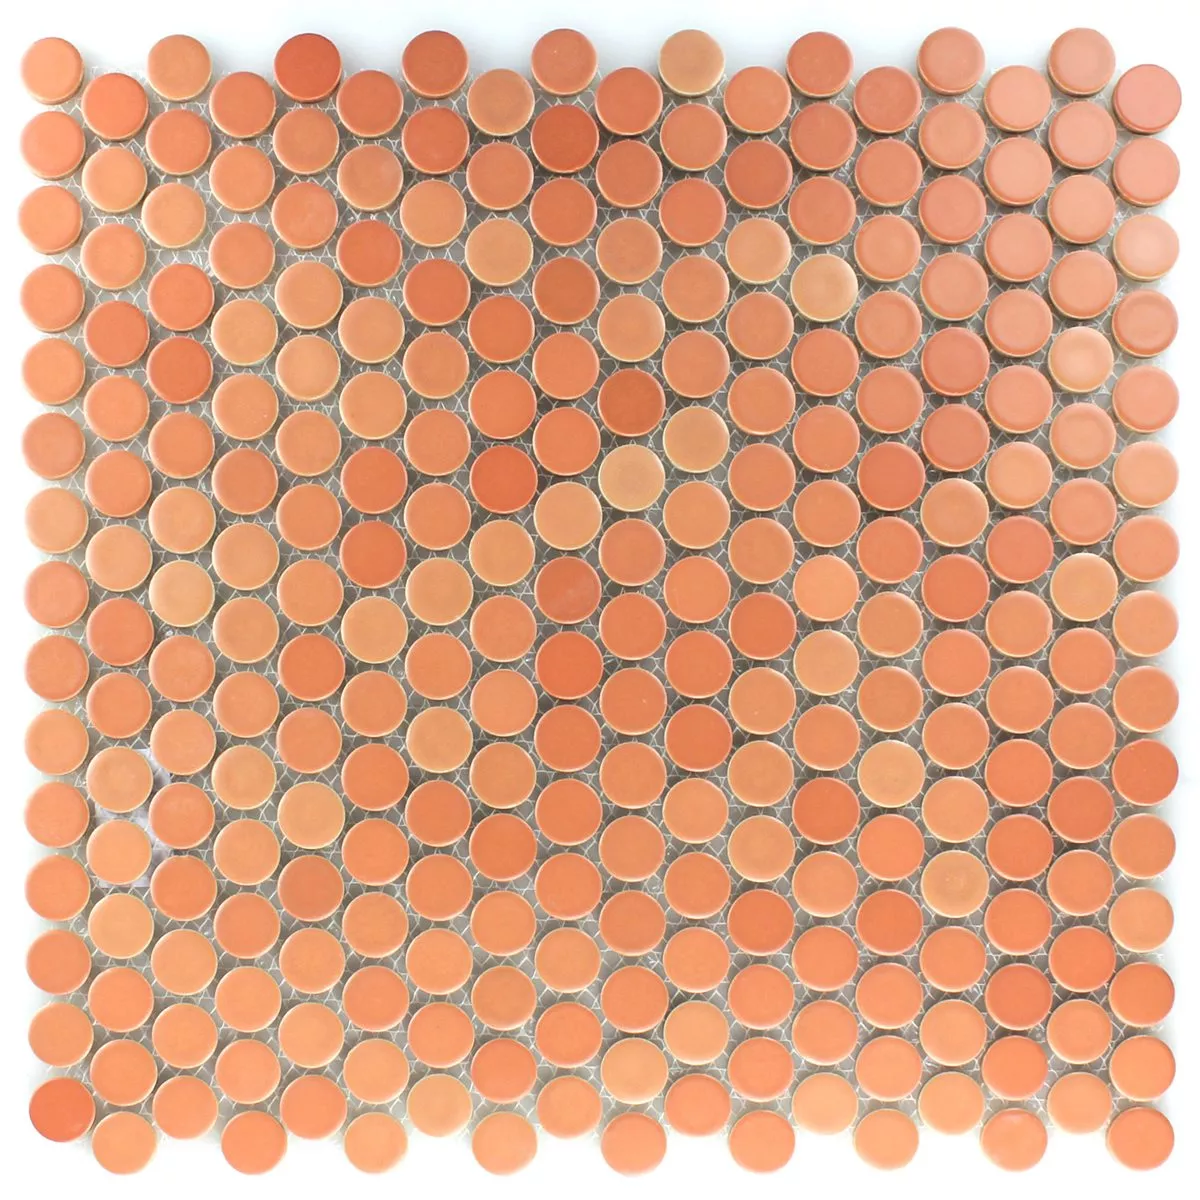 Sample Ceramic Button Mosaic Tiles Round Terracotta